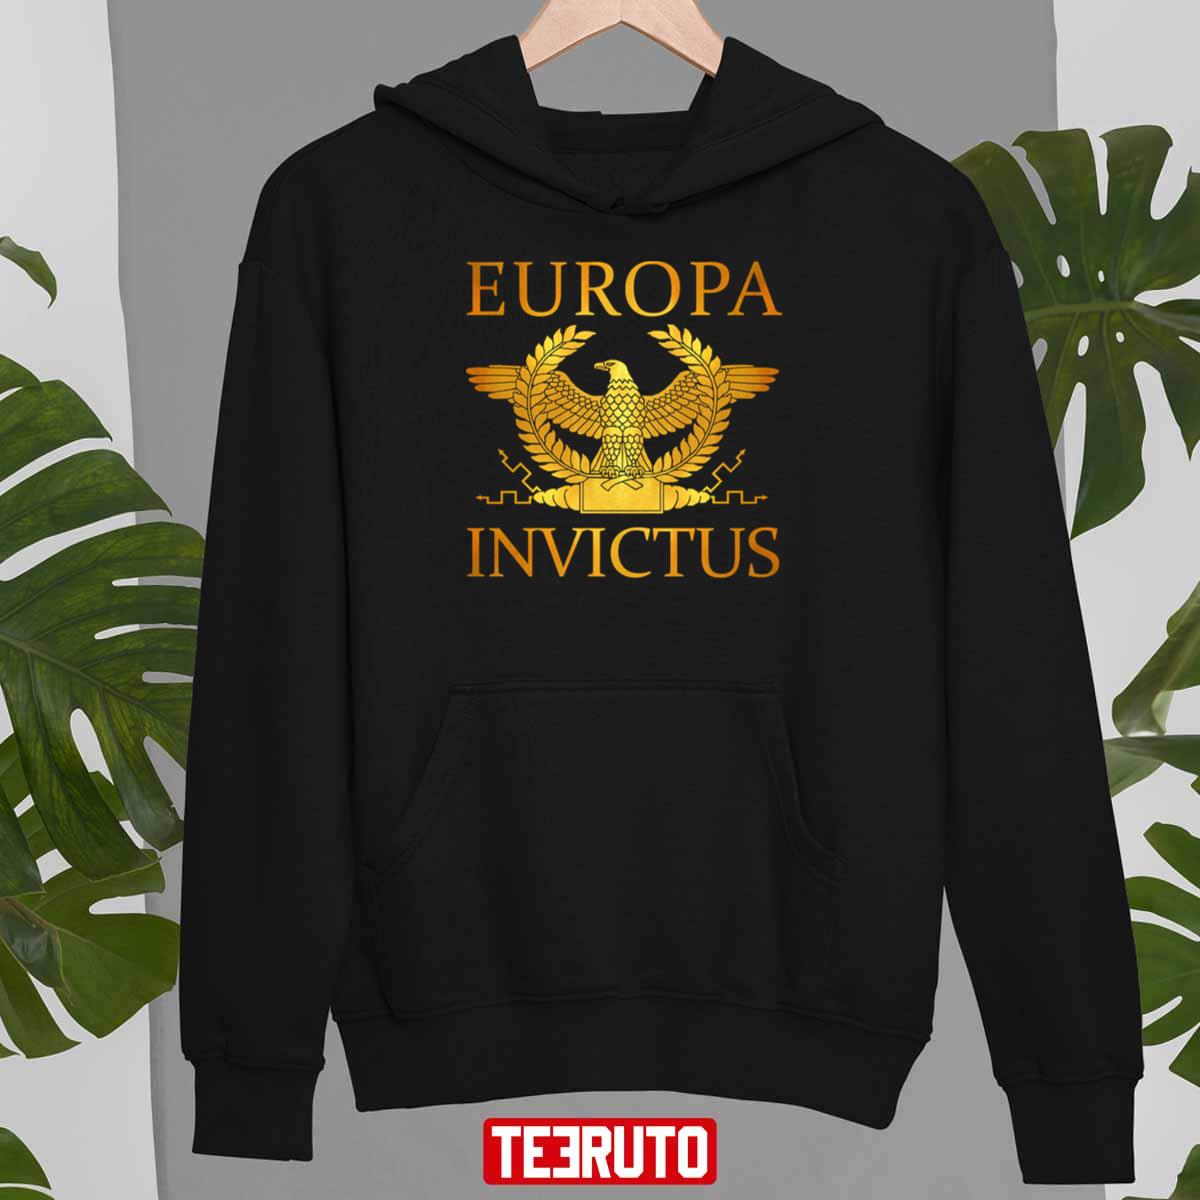 Europa Invictus Unisex T-Shirt